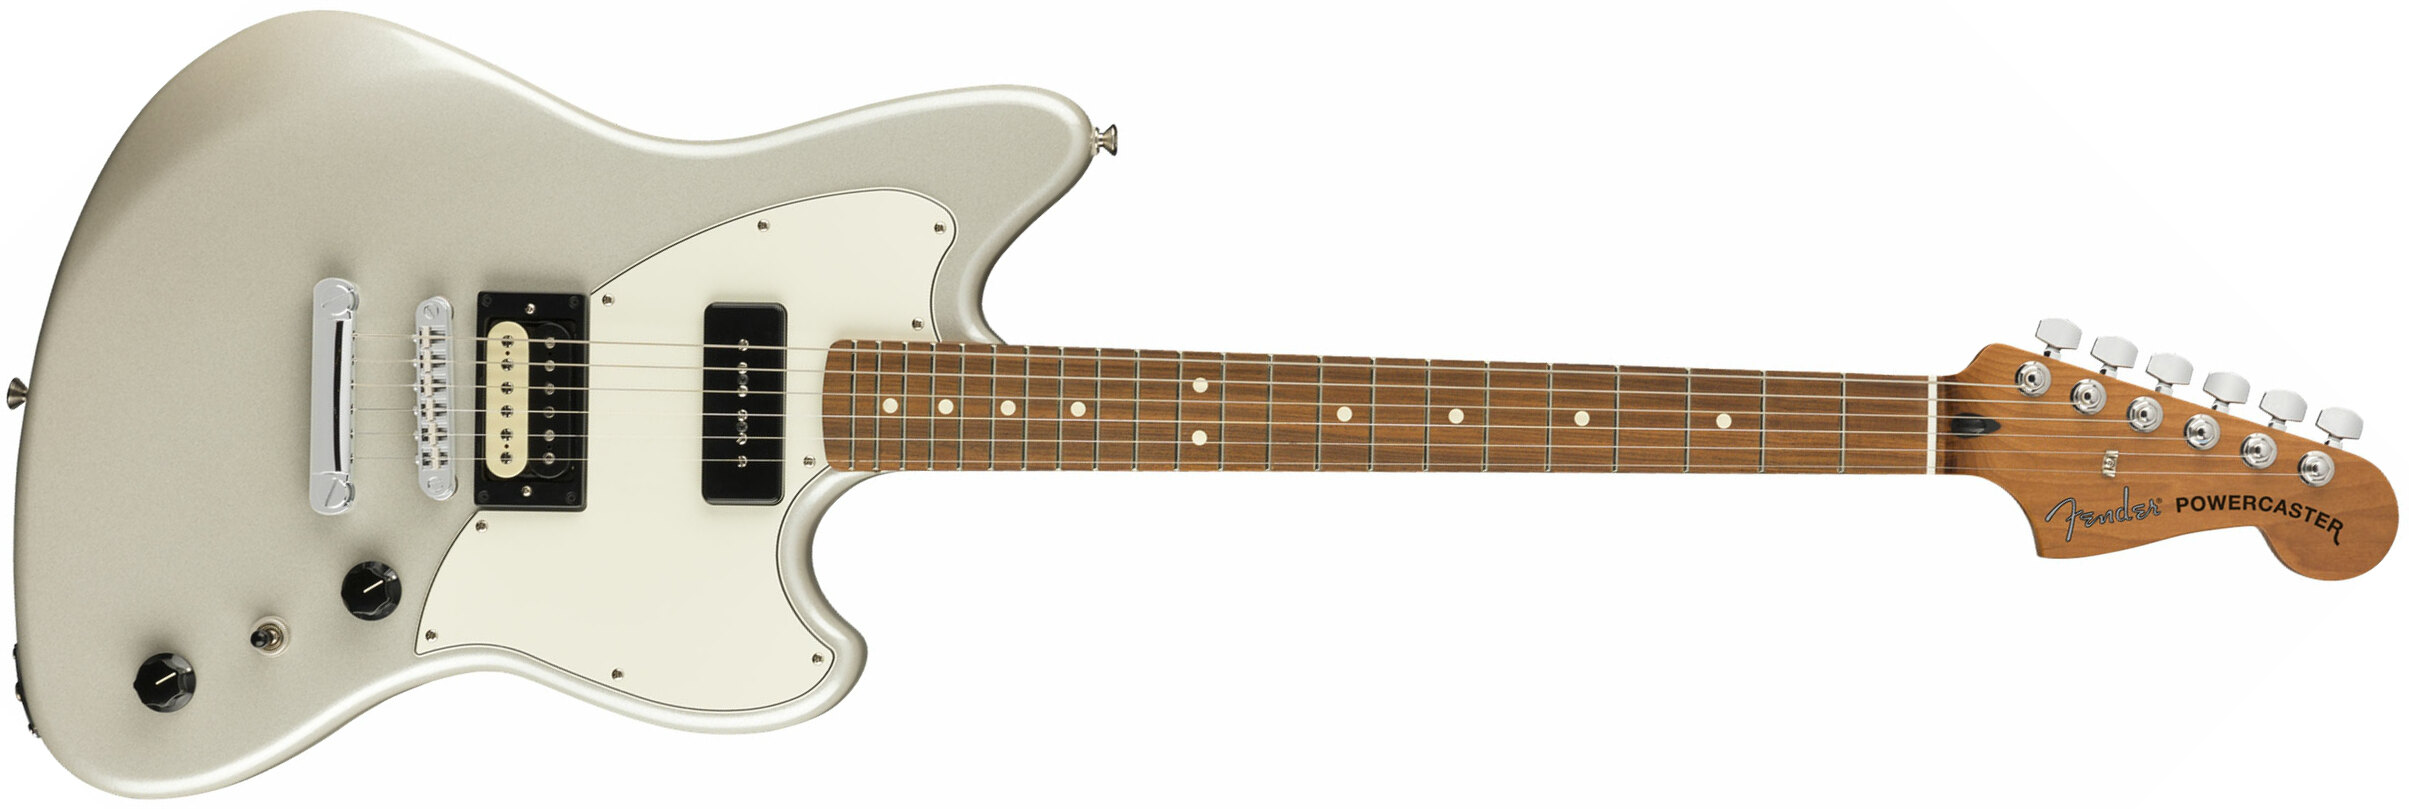 Fender Powercaster Alternate Reality Ltd Hp90 Ht Pf - White Opal - Retro rock electric guitar - Main picture